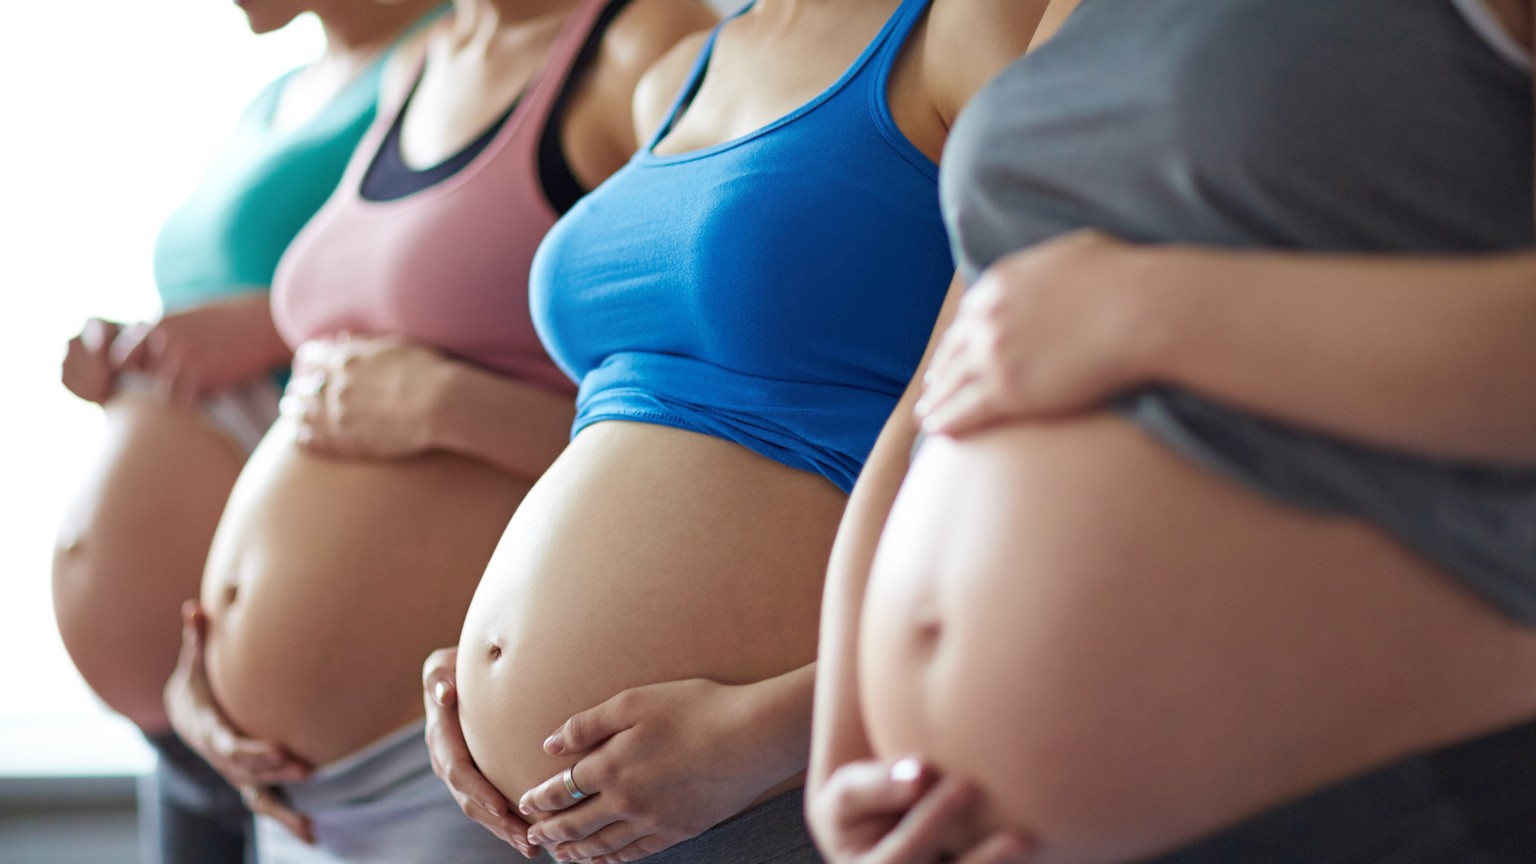 schwanger gruppe frauen pregnant pregnancy schwangerschaft kind baby bauch